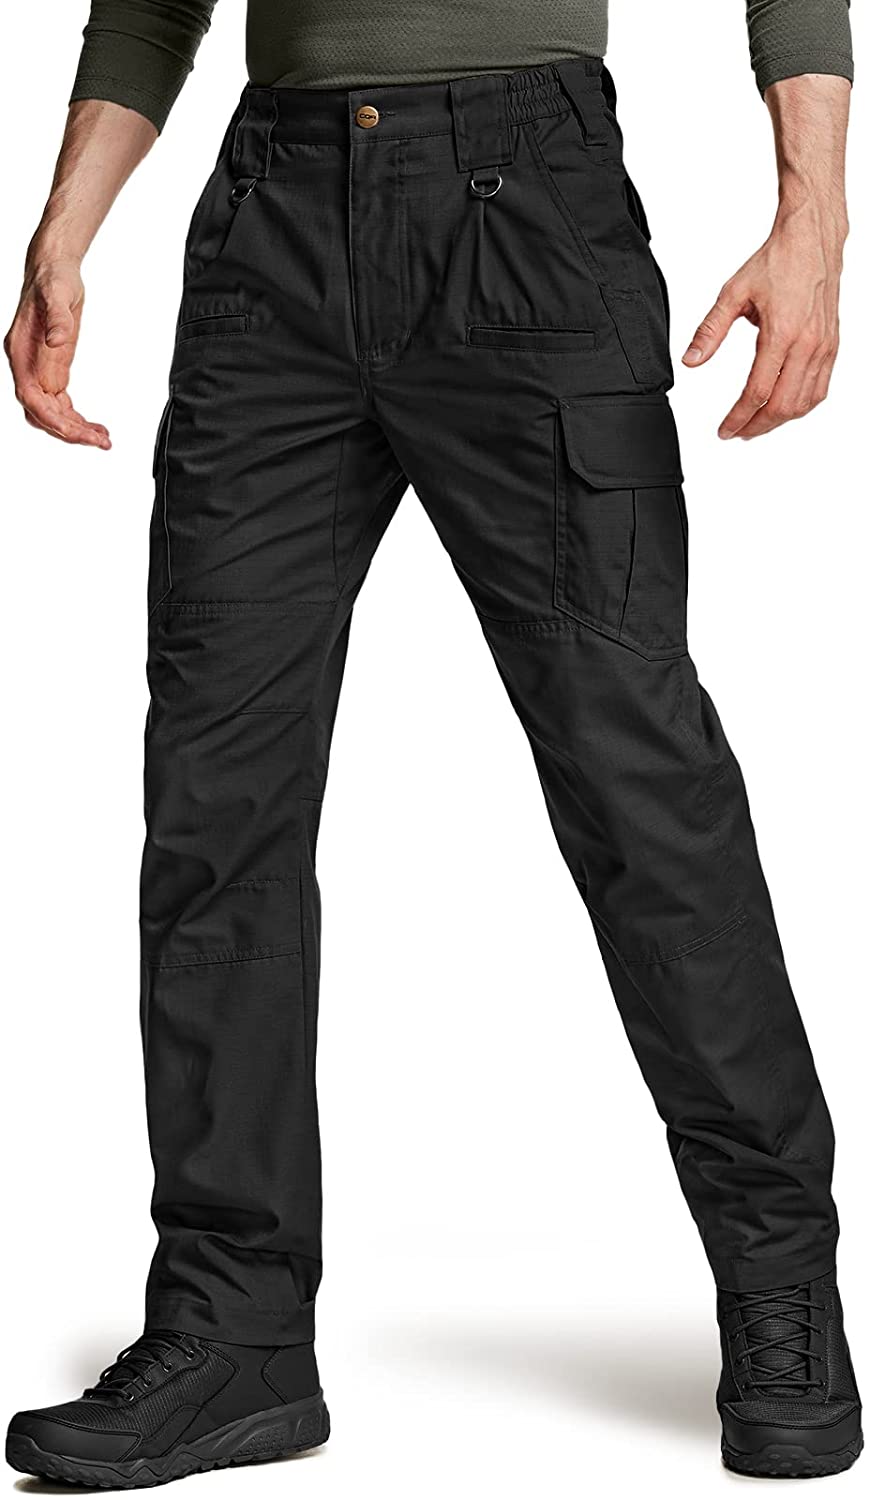 Water Resistant Tactical Pants CQR Men's Flex Ripstop Work Pants Outdoor Utility Operator EDC Cargo Pants 